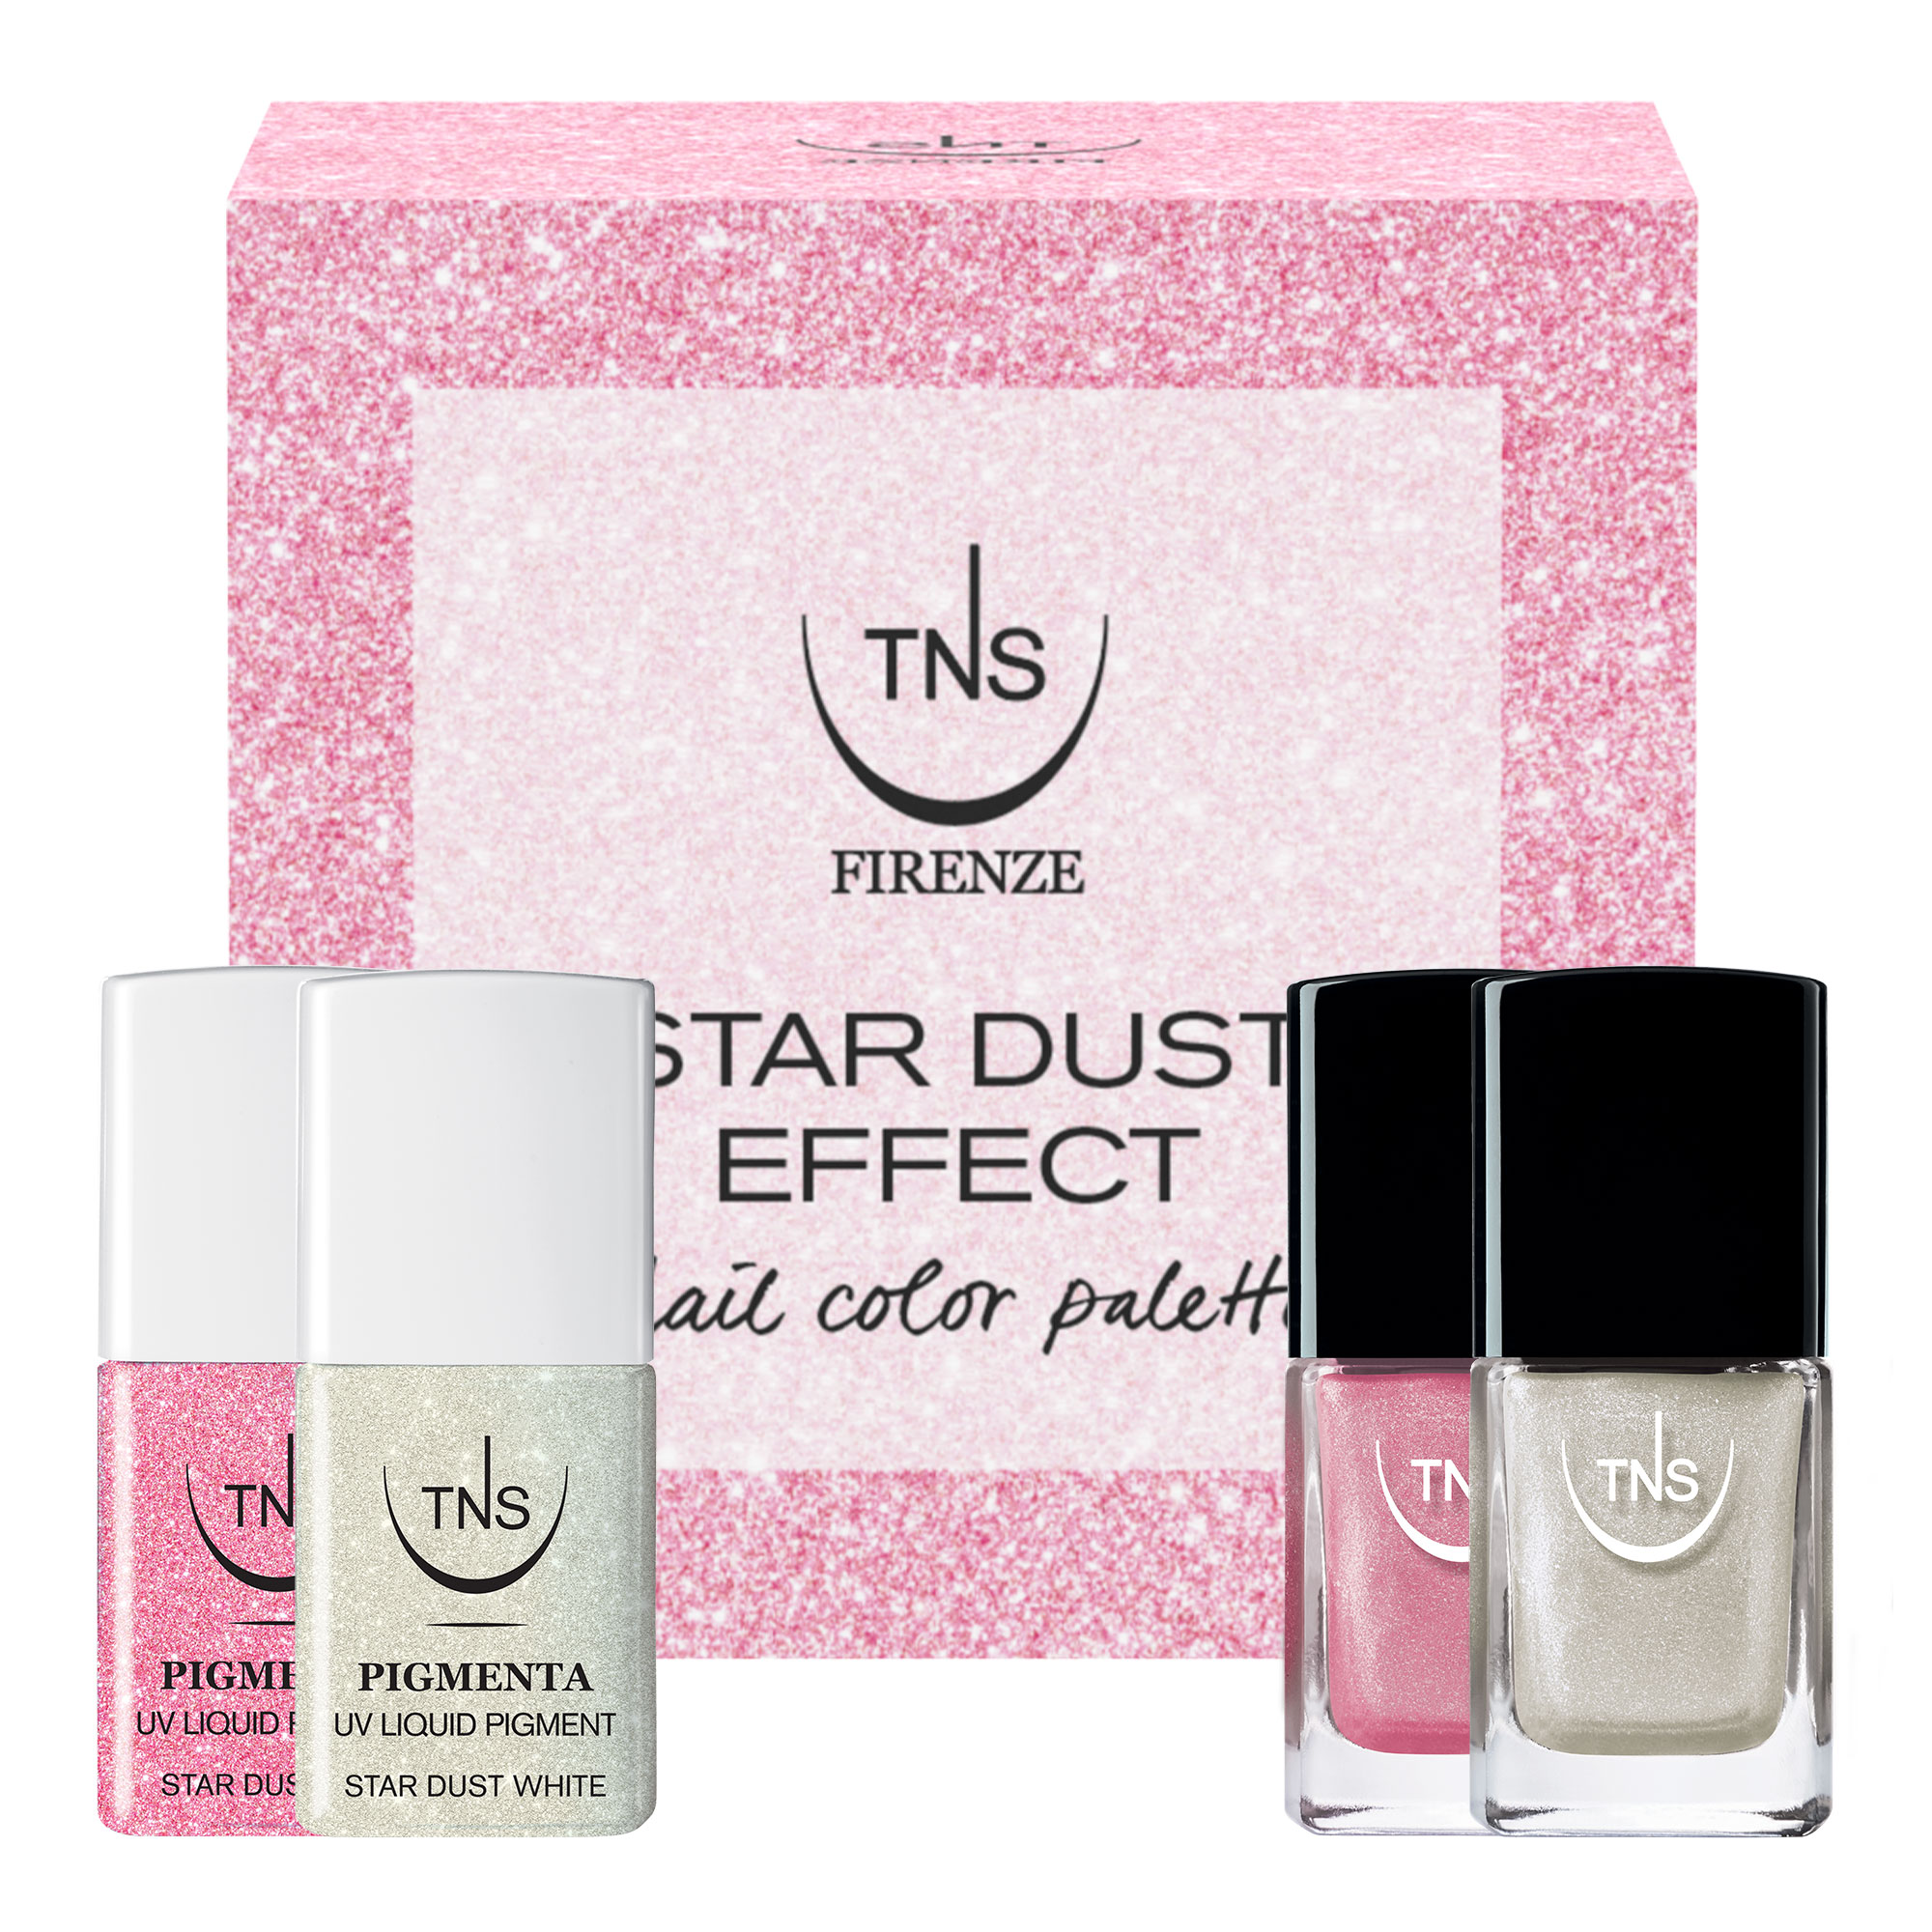 TNS Stardust Effect Kit Pigmenta and Glitter Nail Polishes